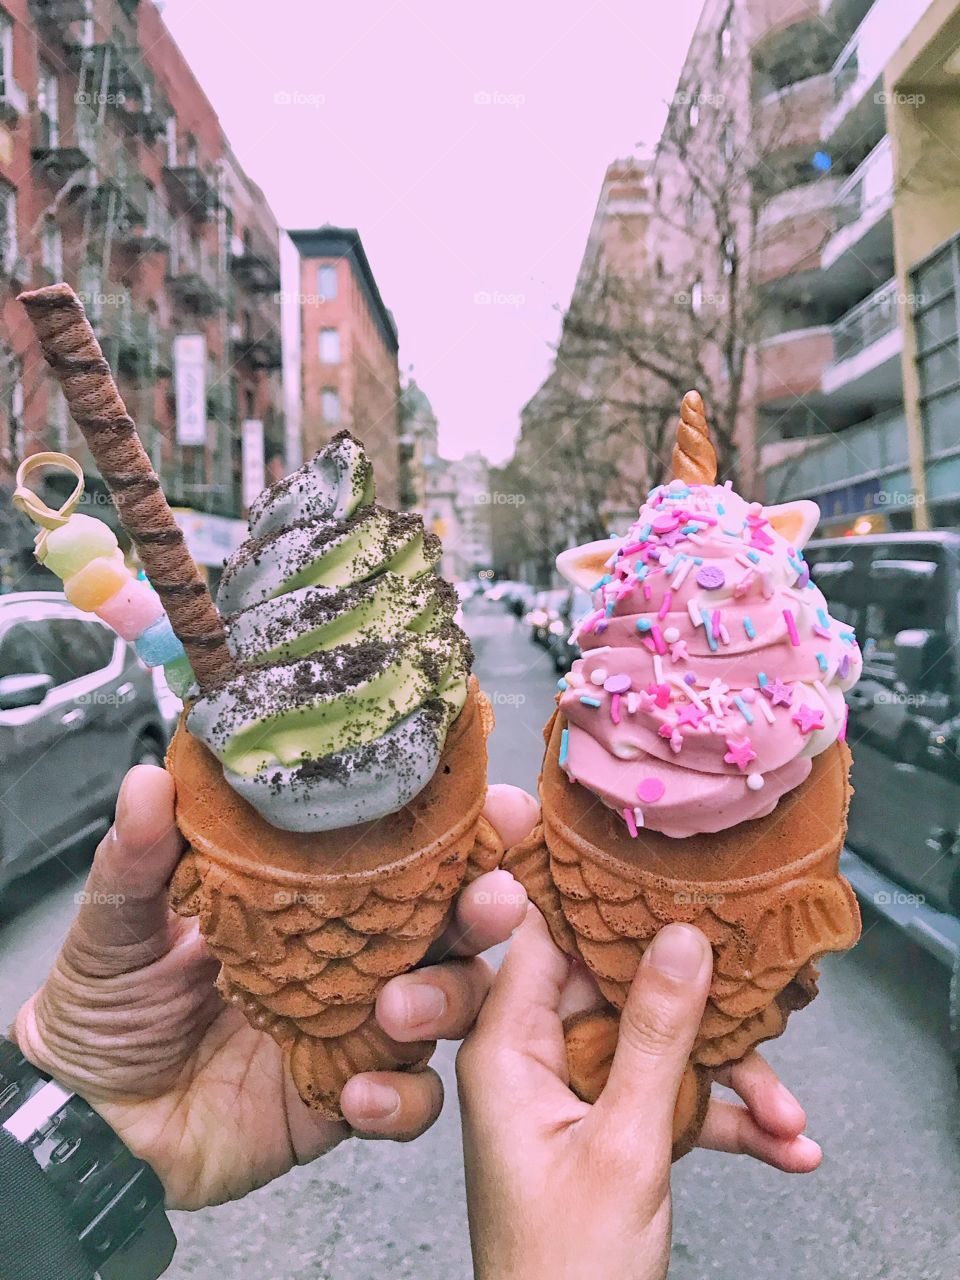 Taiyaki Ice Cream!